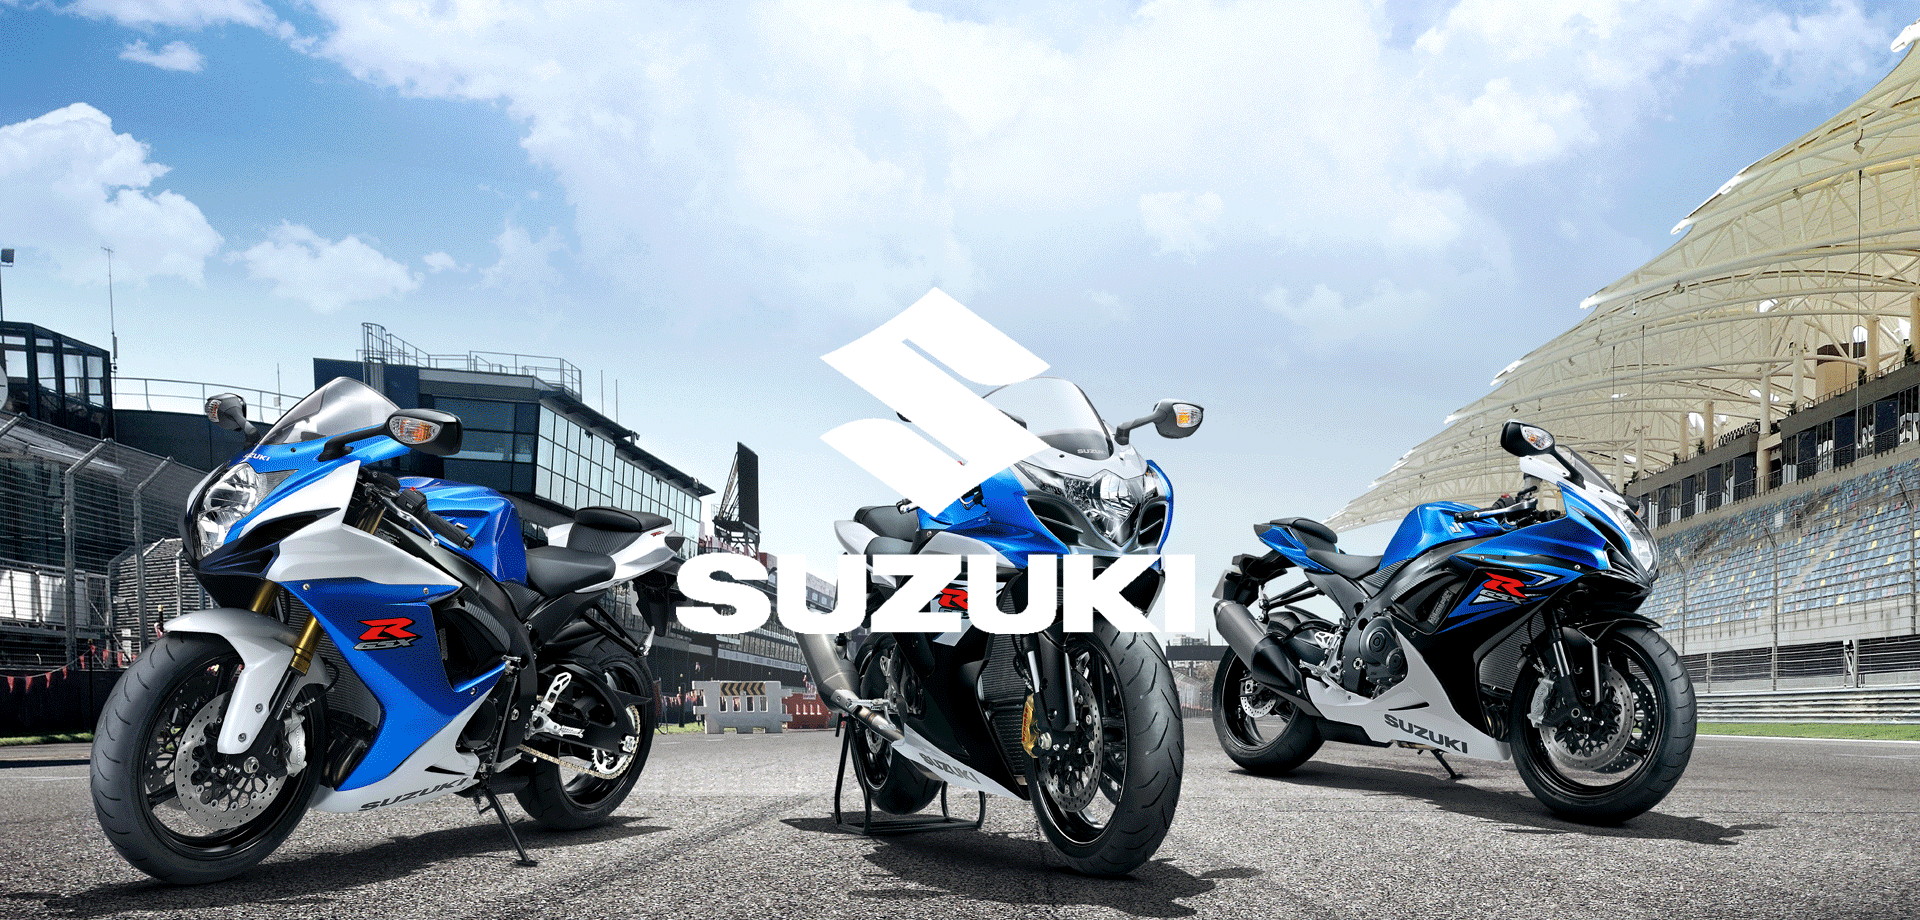 Suzuki Motos Overbrand